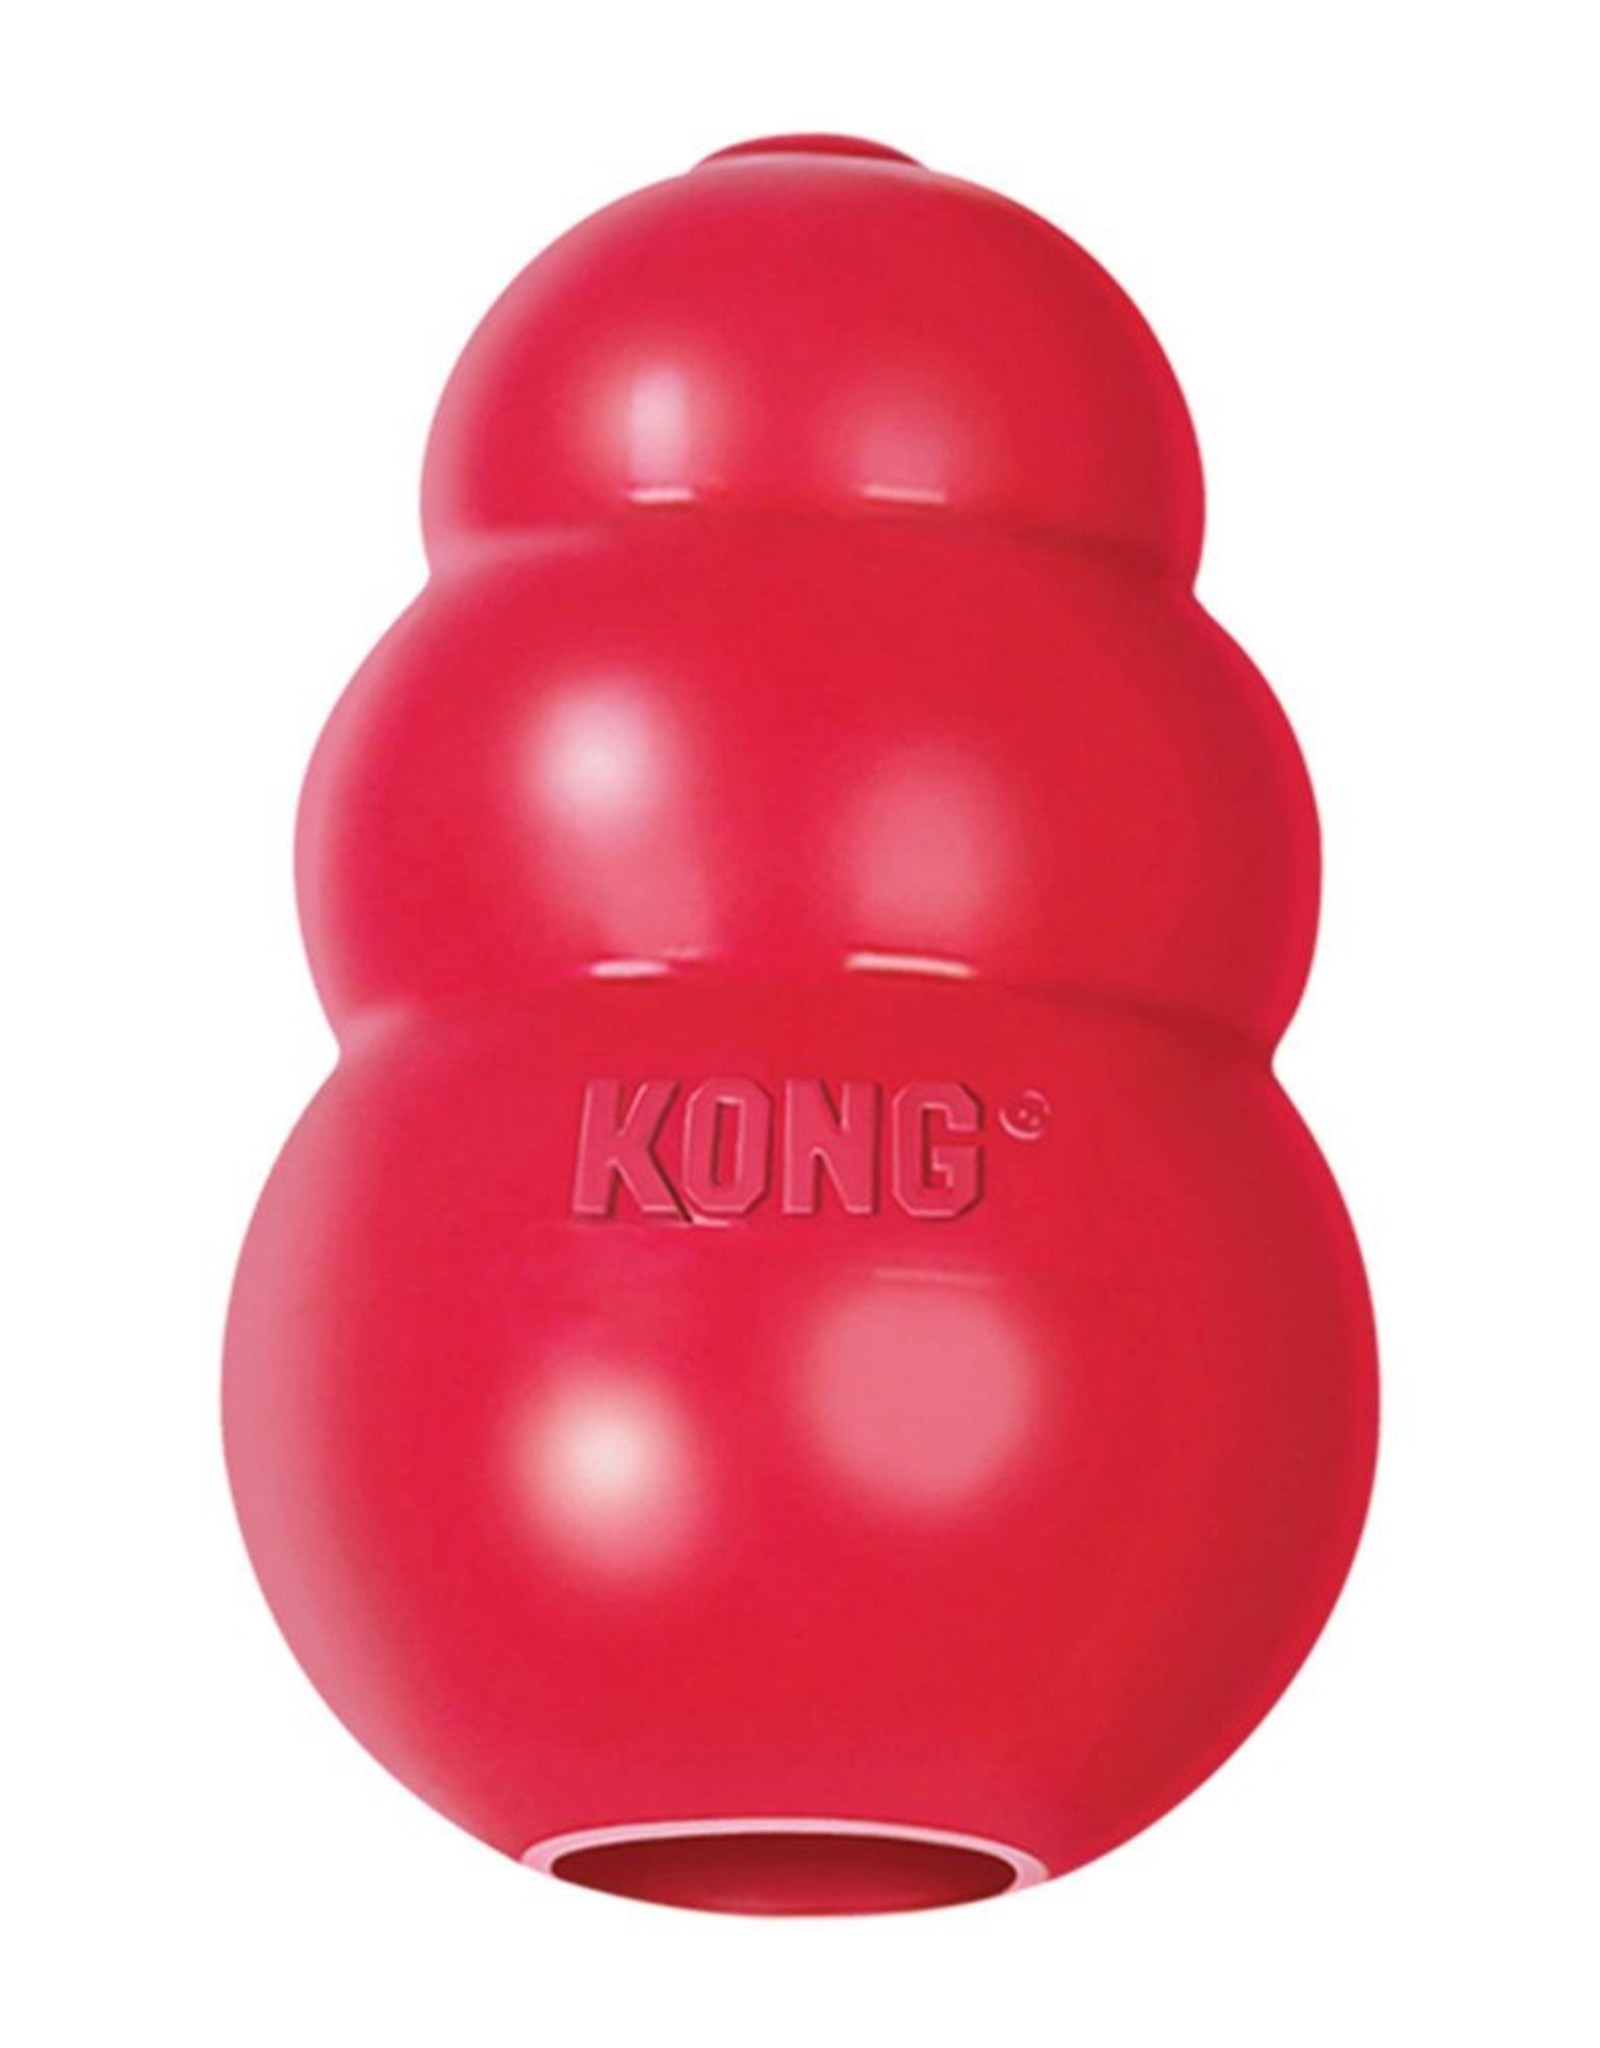 KONG COMPANY KONG ORIGINAL XL